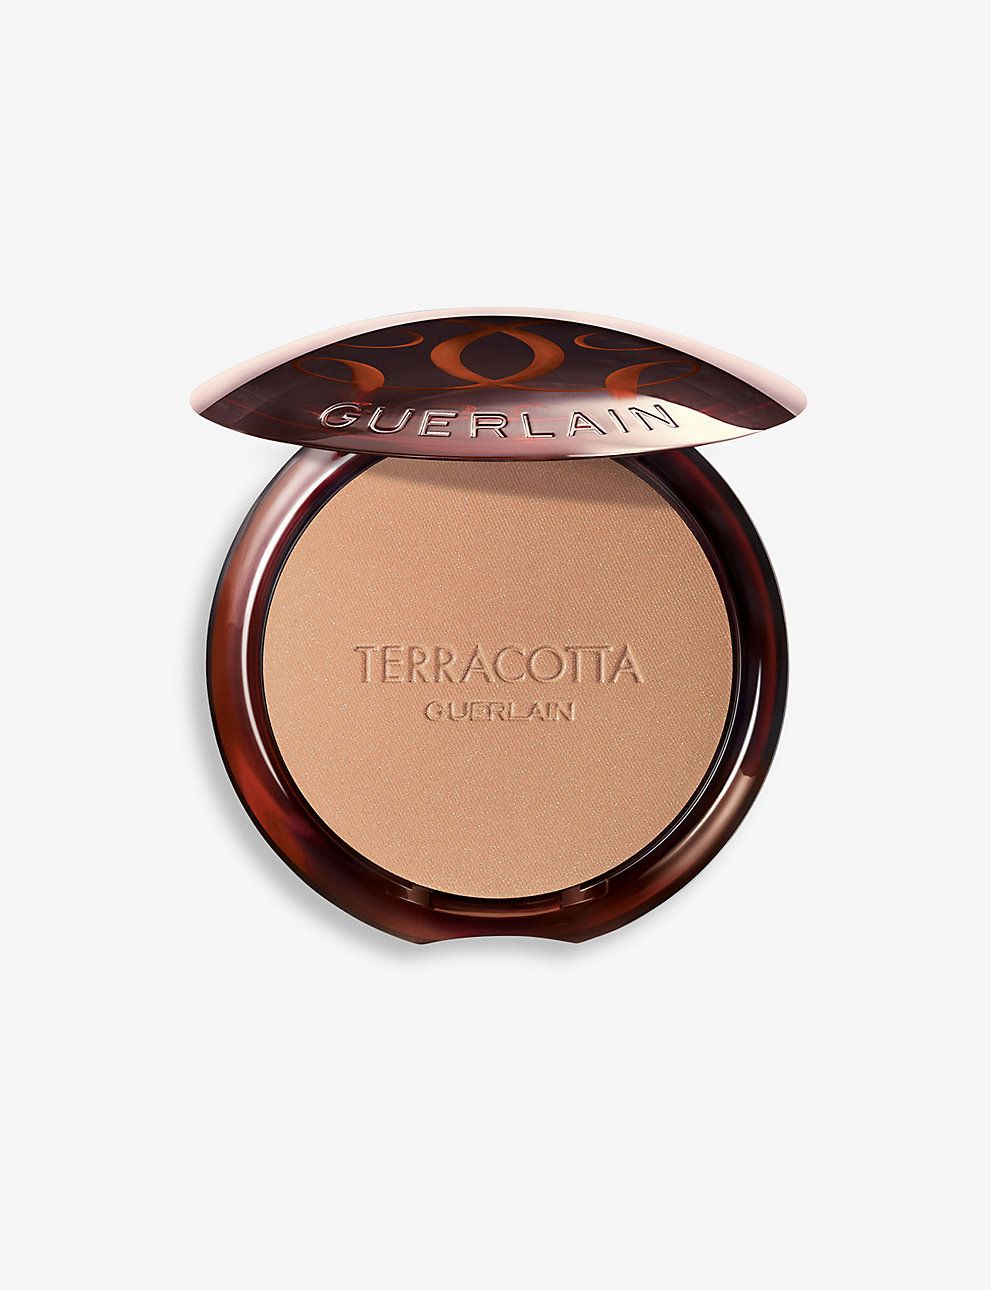 Terracotta bronzing powder 10g | Selfridges